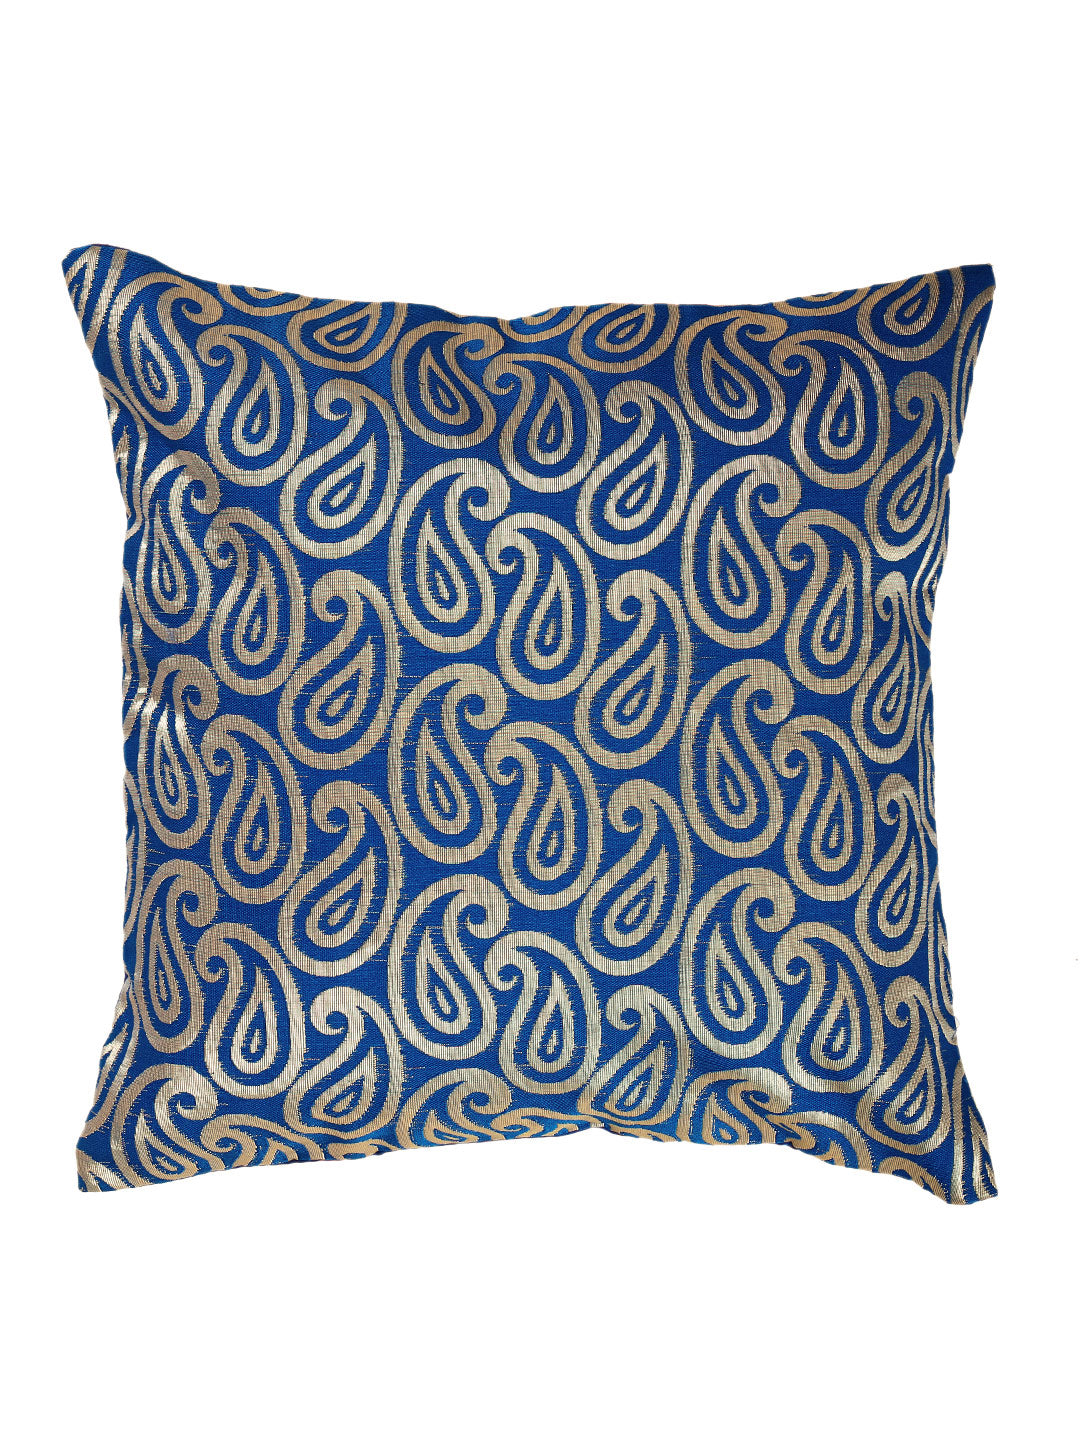 Silkfab Set 0f 5 Decorative Silk Cushion Covers (16x16) Paisley Blue - SILKFAB